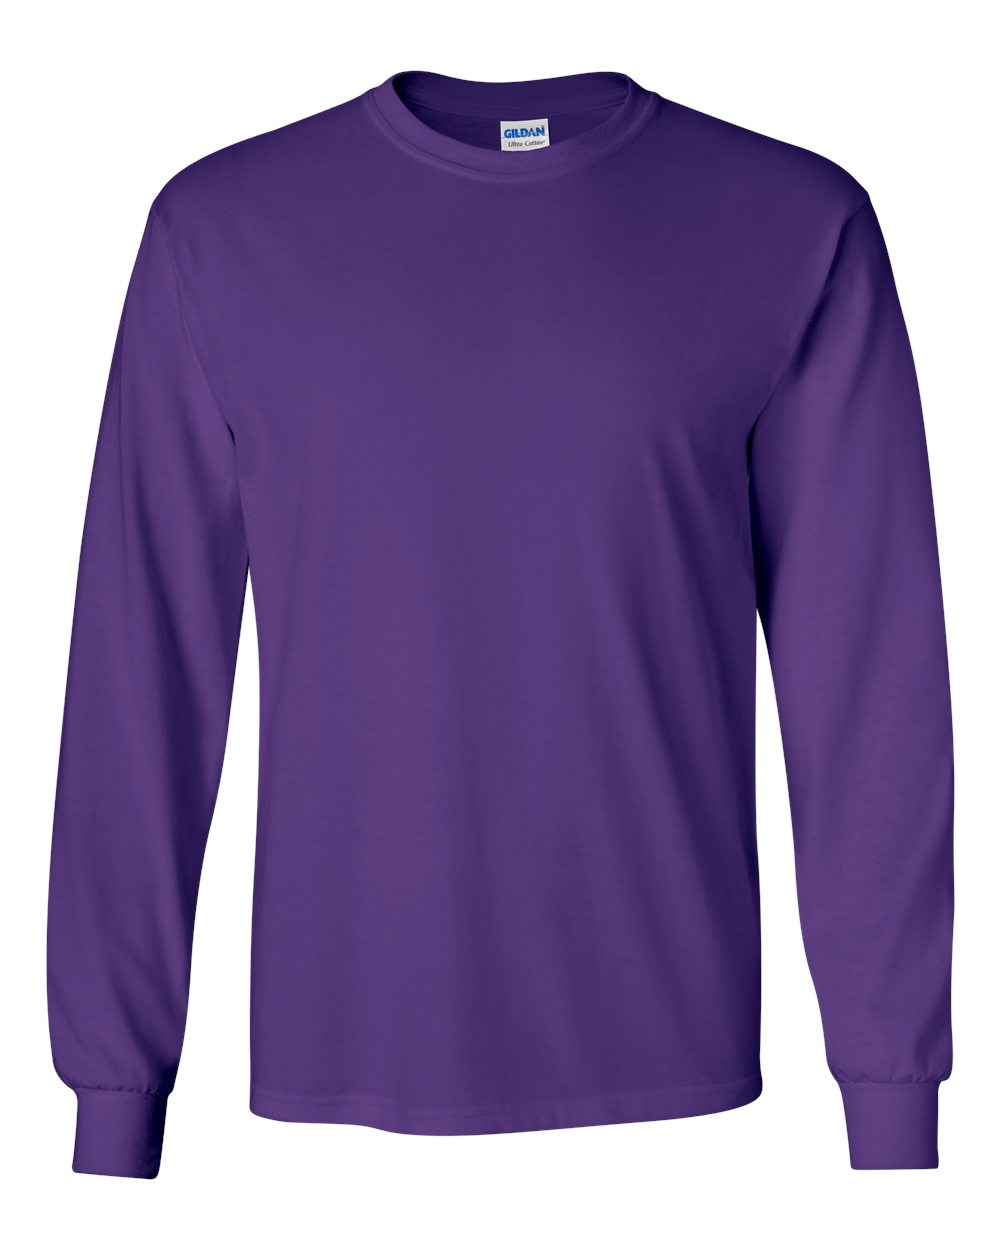 Gildan Long Sleeve (2400) in Purple